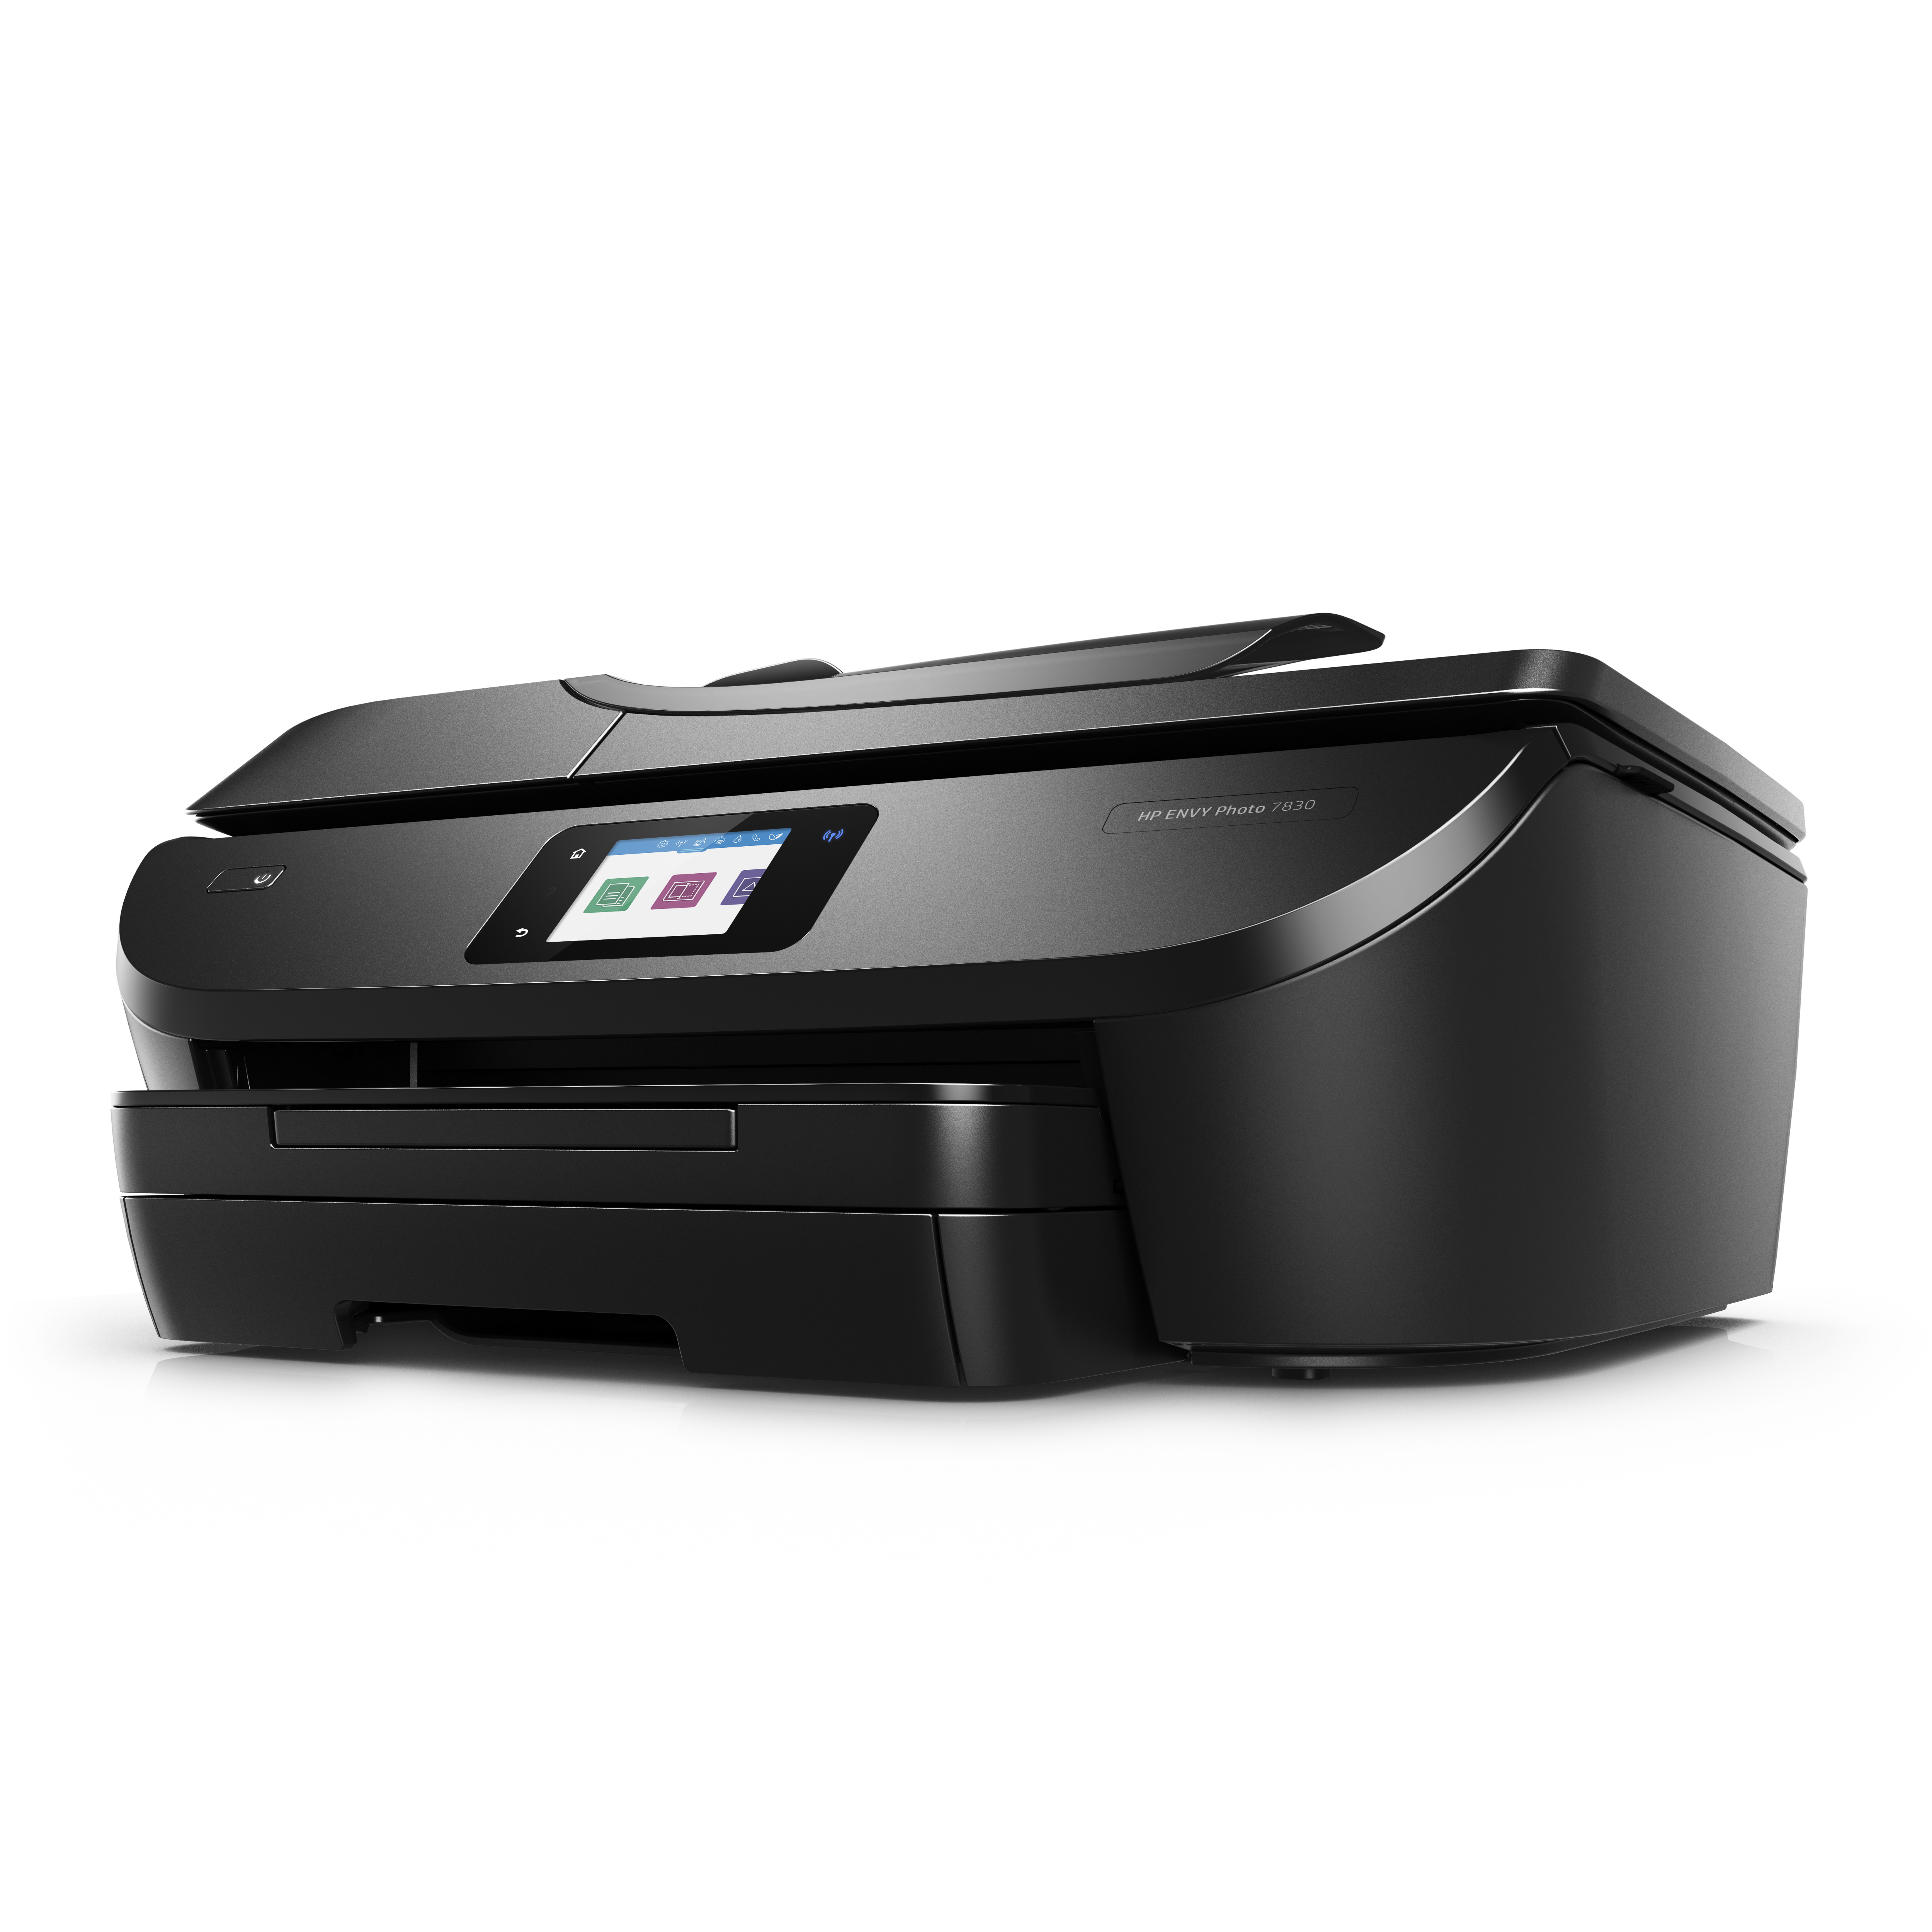 HP ENVY Photo 7830 (Instant 4-in-1 Multifunktionsdrucker WLAN Thermal Netzwerkfähig Ink) Inkjet